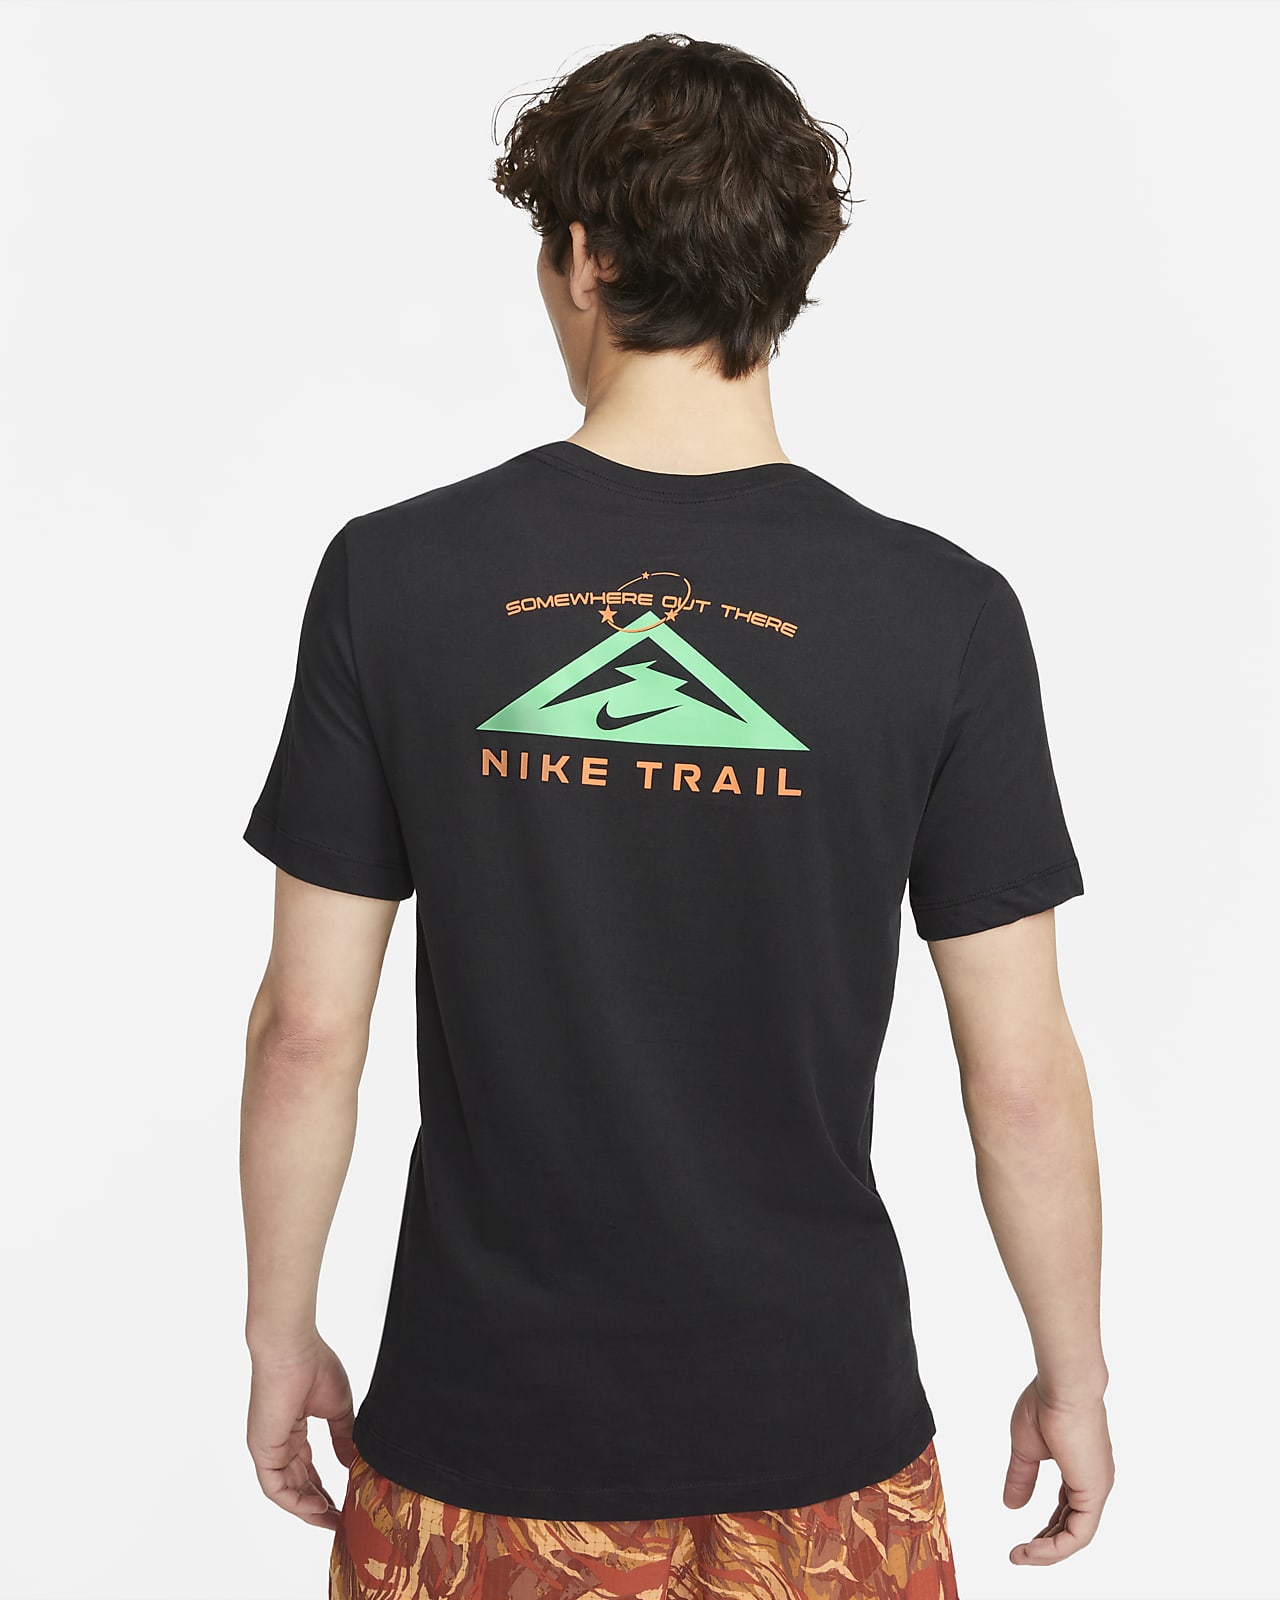 Nike Running - Trail - Débardeur à logo - Gris